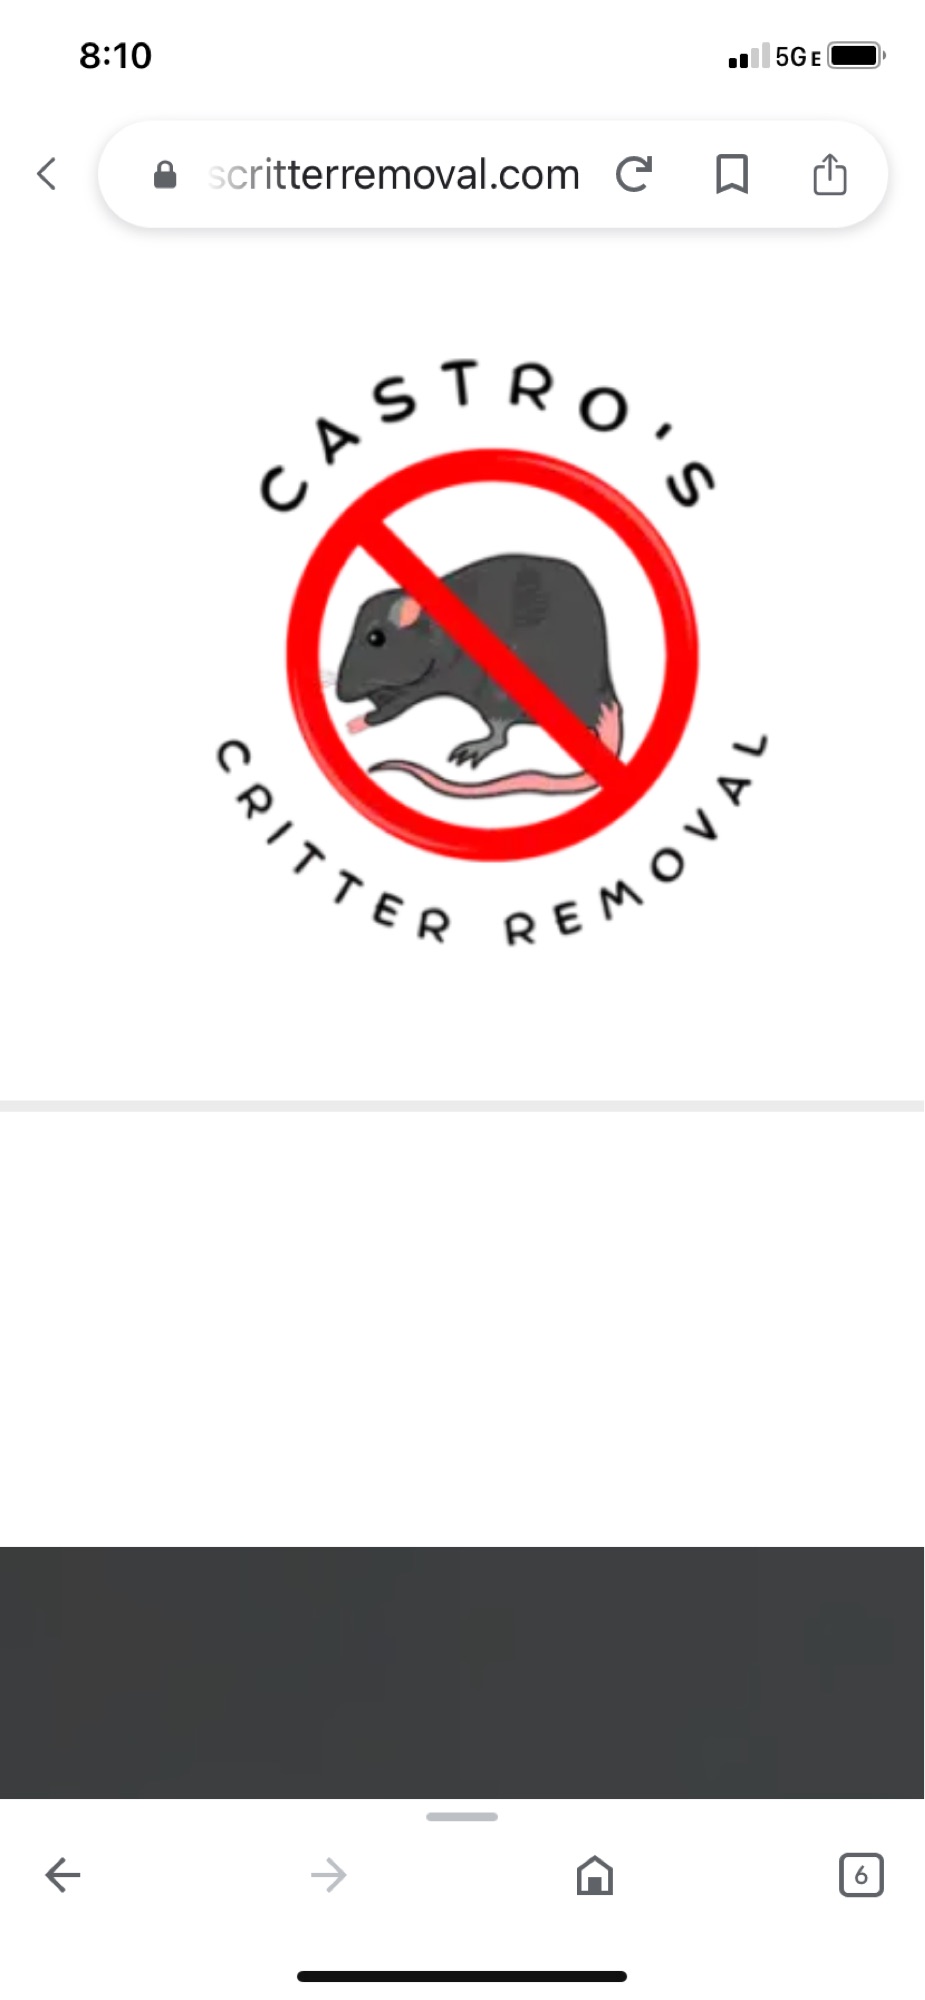 Castros Critter Removal Logo